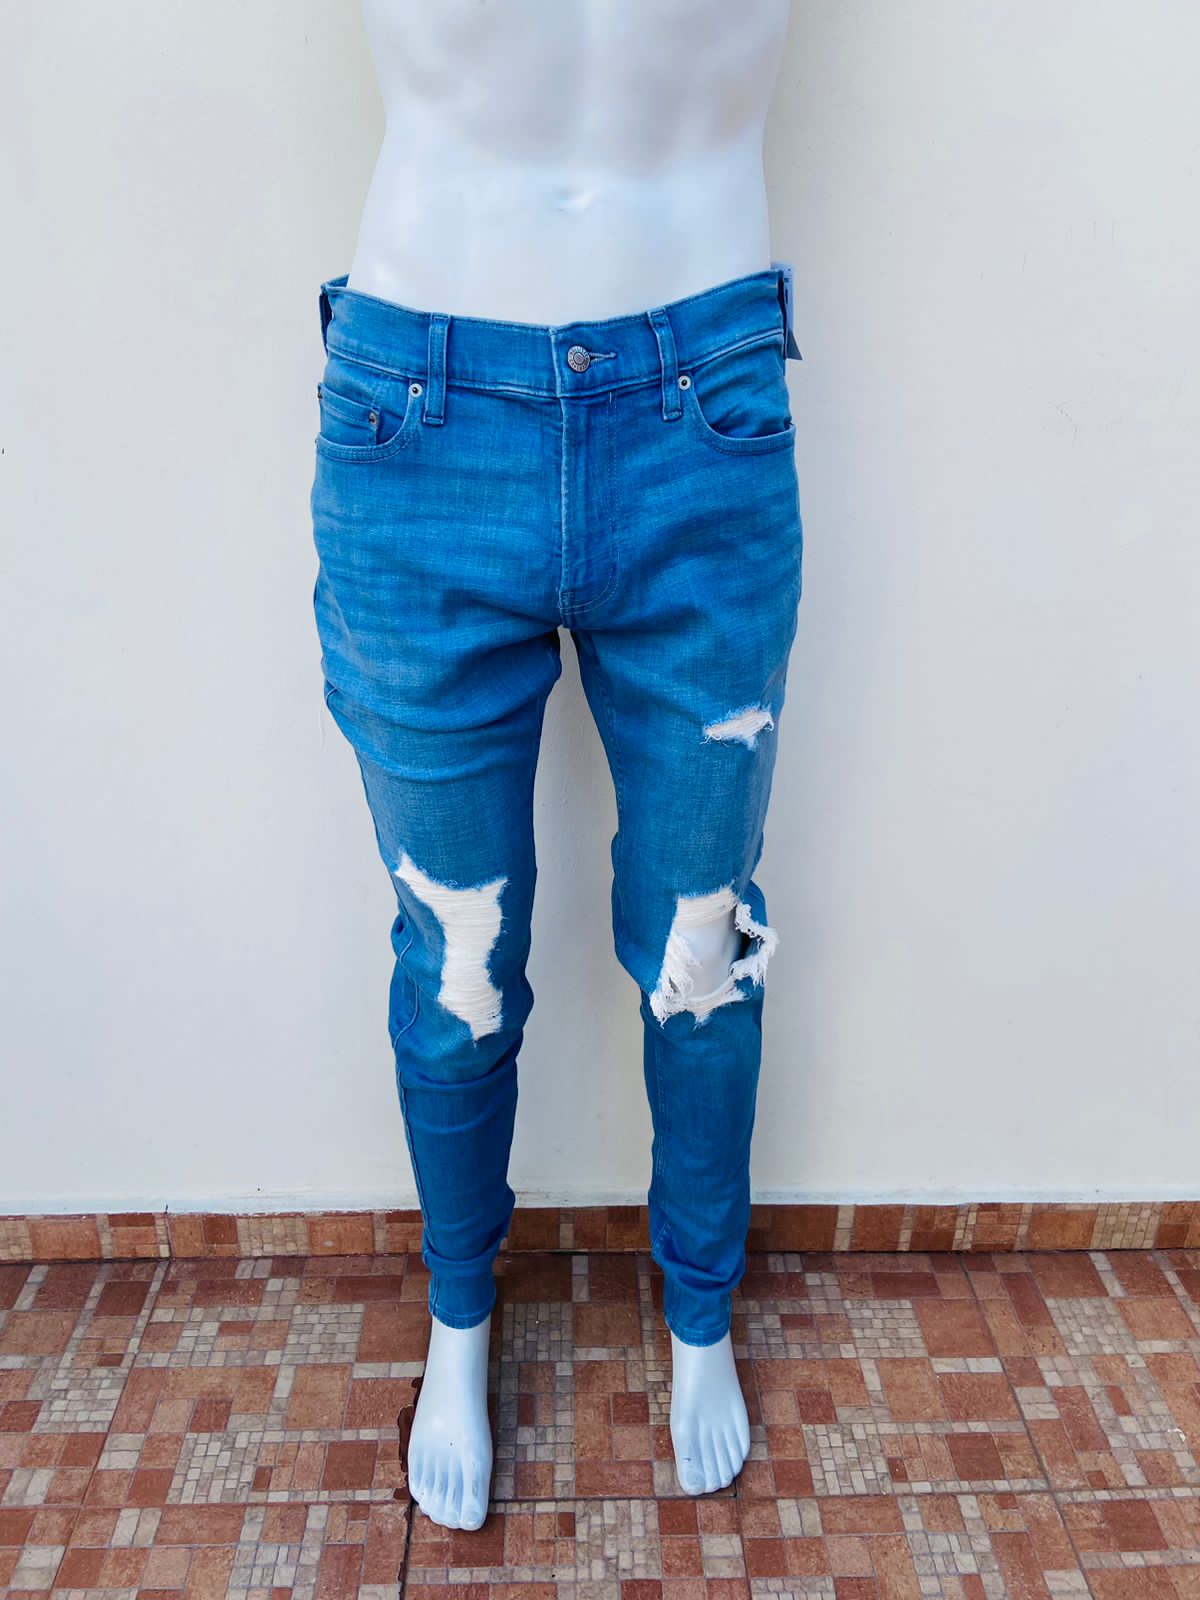 Pantalon jeans Hollister original azul claro con rasgados al frente y diseño de letra HOLLISTER CALIFORNIA en la parte de atrás con recuadro blanco ADVANCE STRETCH STACKED SKINNY